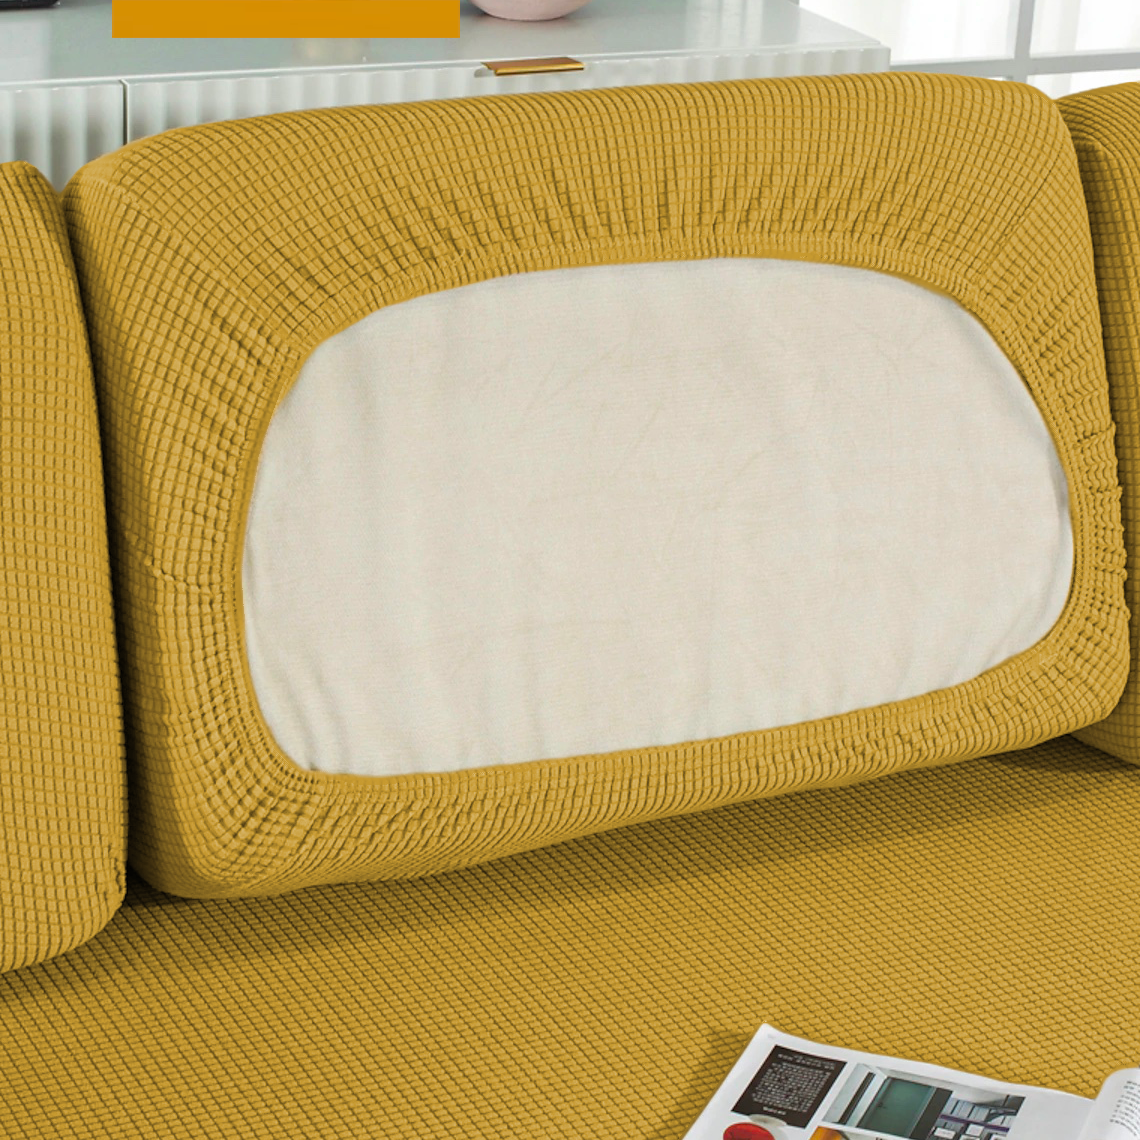 Coppia copriseduta divano antimacchia - seduta singola 50x75cm in varie colorazioni